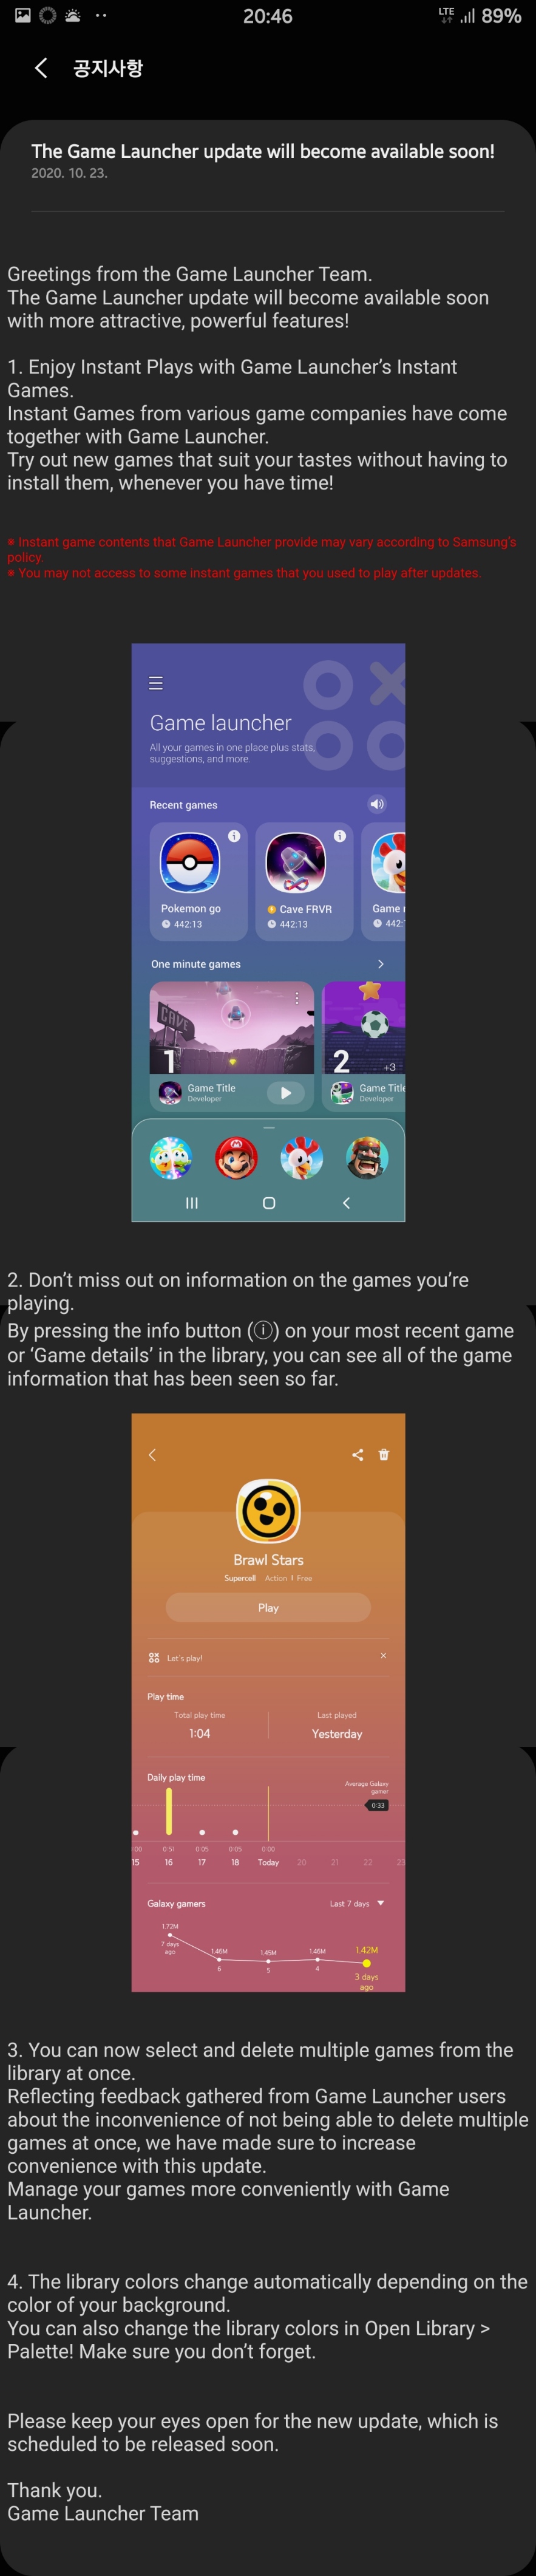 Screenshot_20201024-204637_Game Launcher.jpg